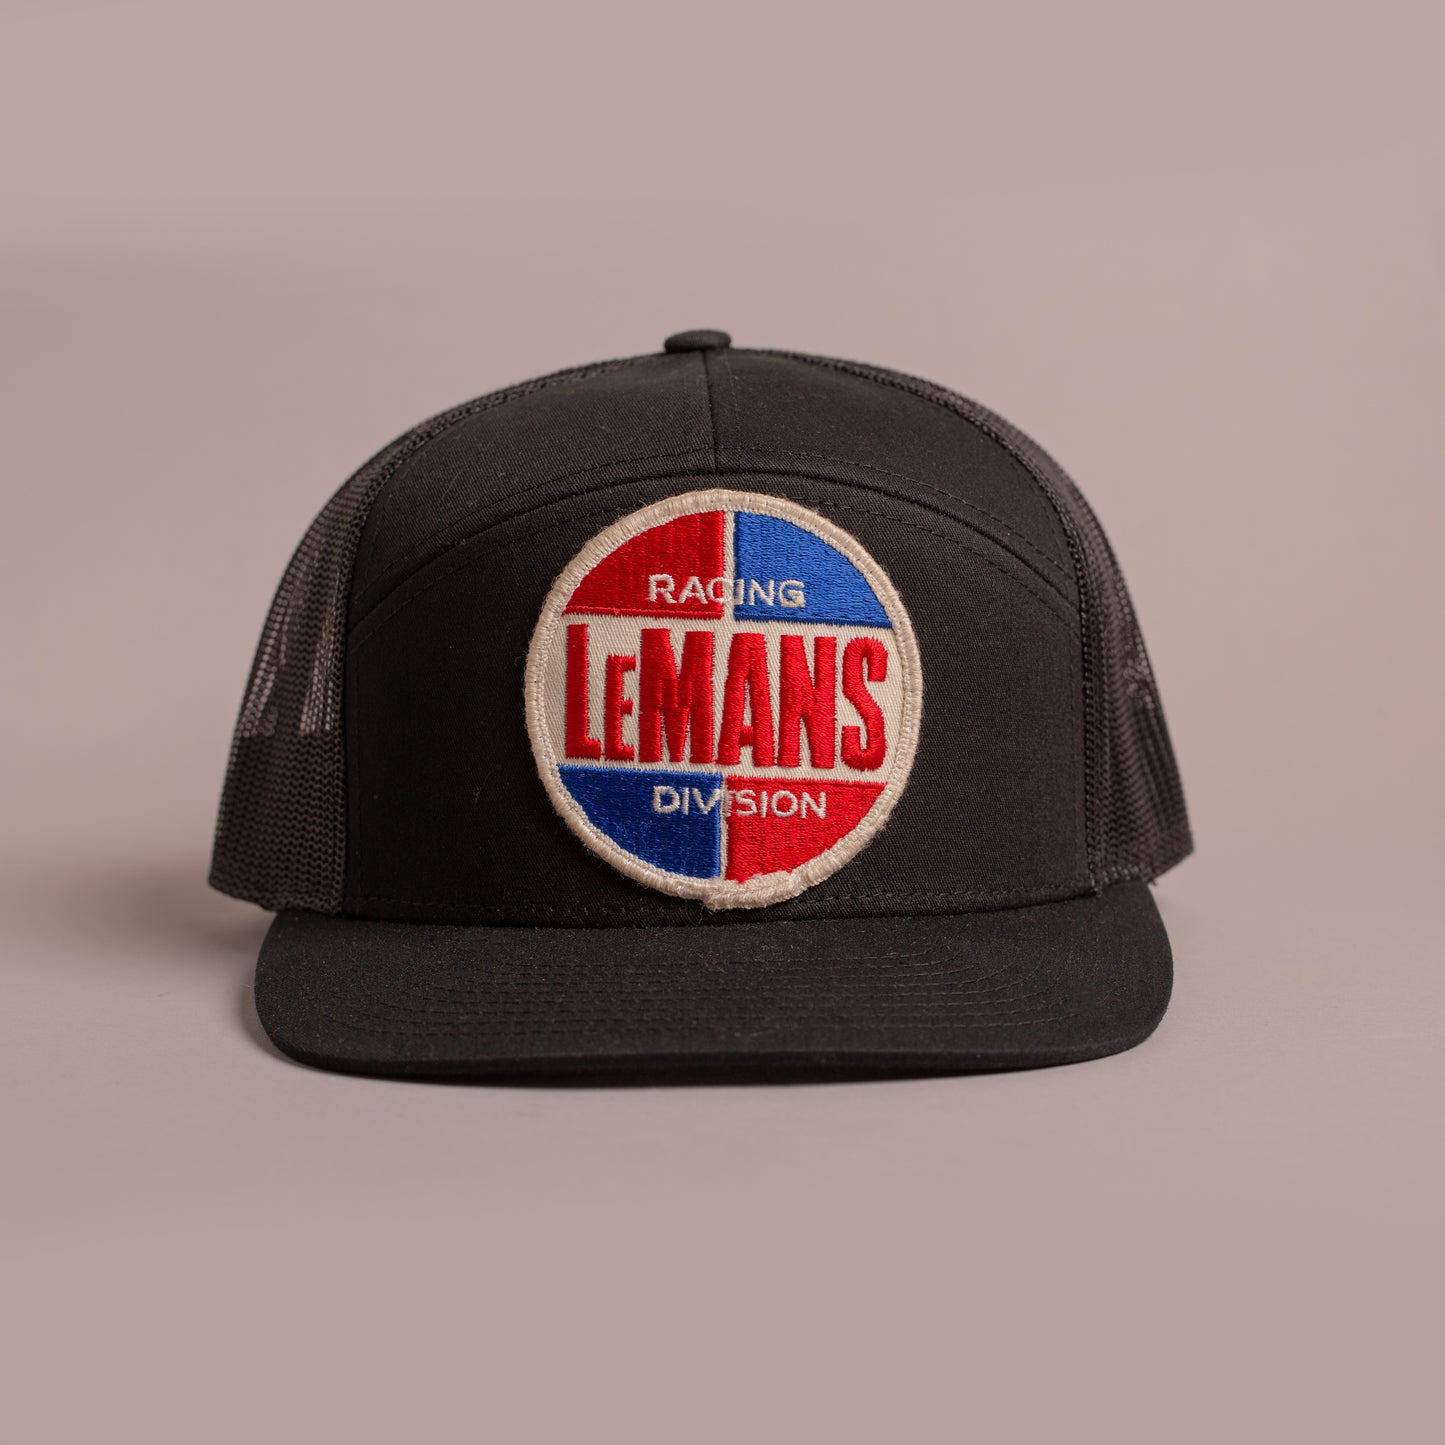 LeMans Racing Division